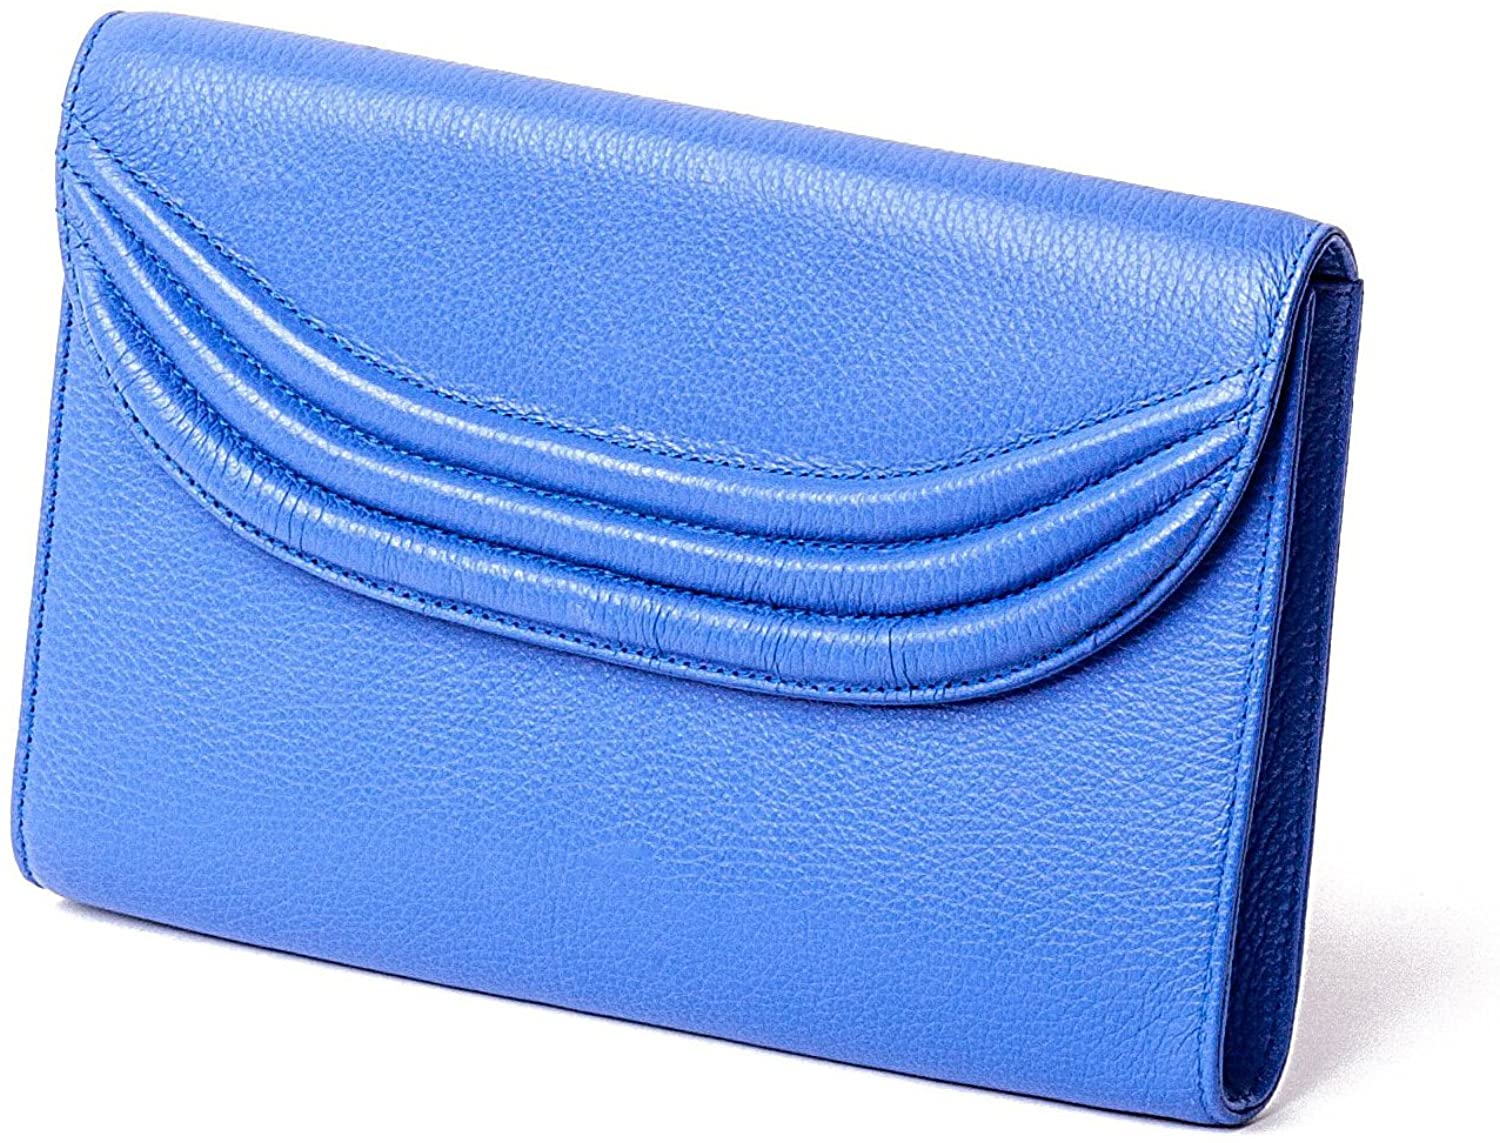 Price:$99.00 Genuine Italian Leather Clutch Purse - Lauren Cecchi New York Clutch - Electric Blue  Handbags   